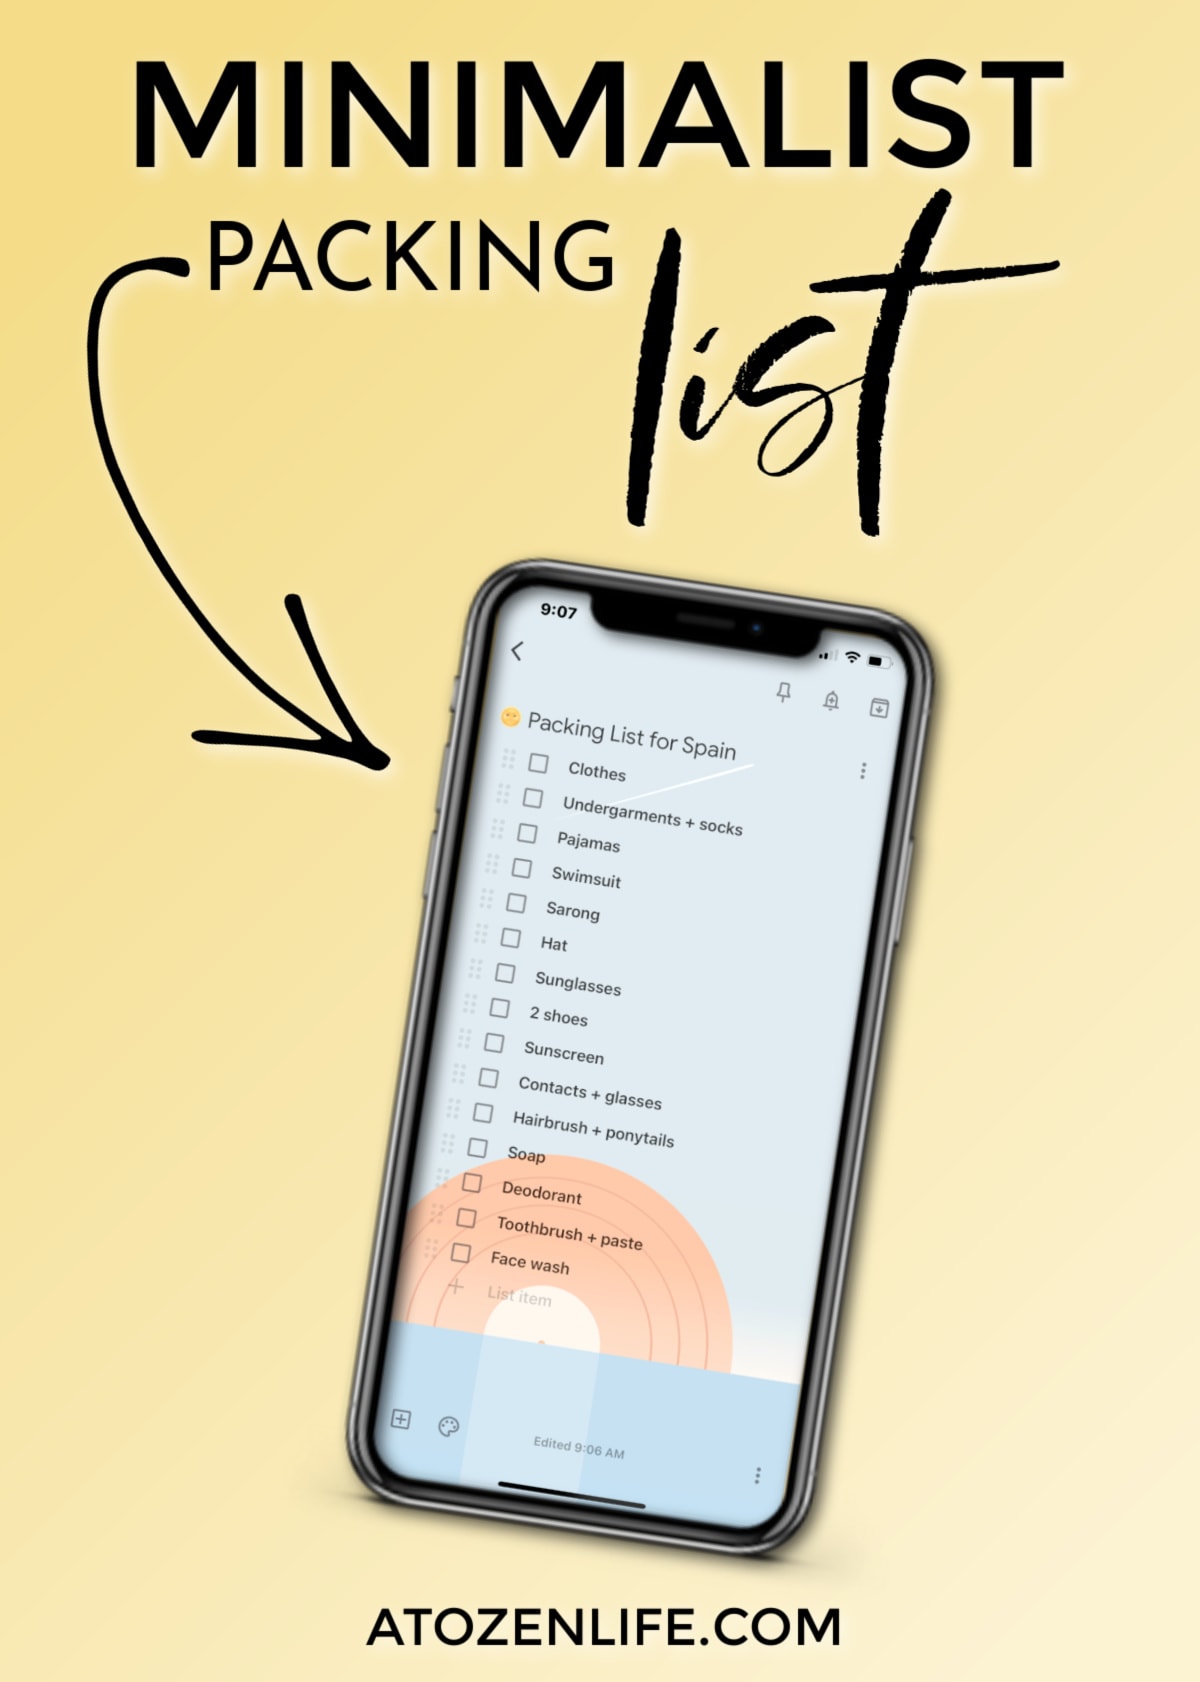 A minimalist packing list on a phone app